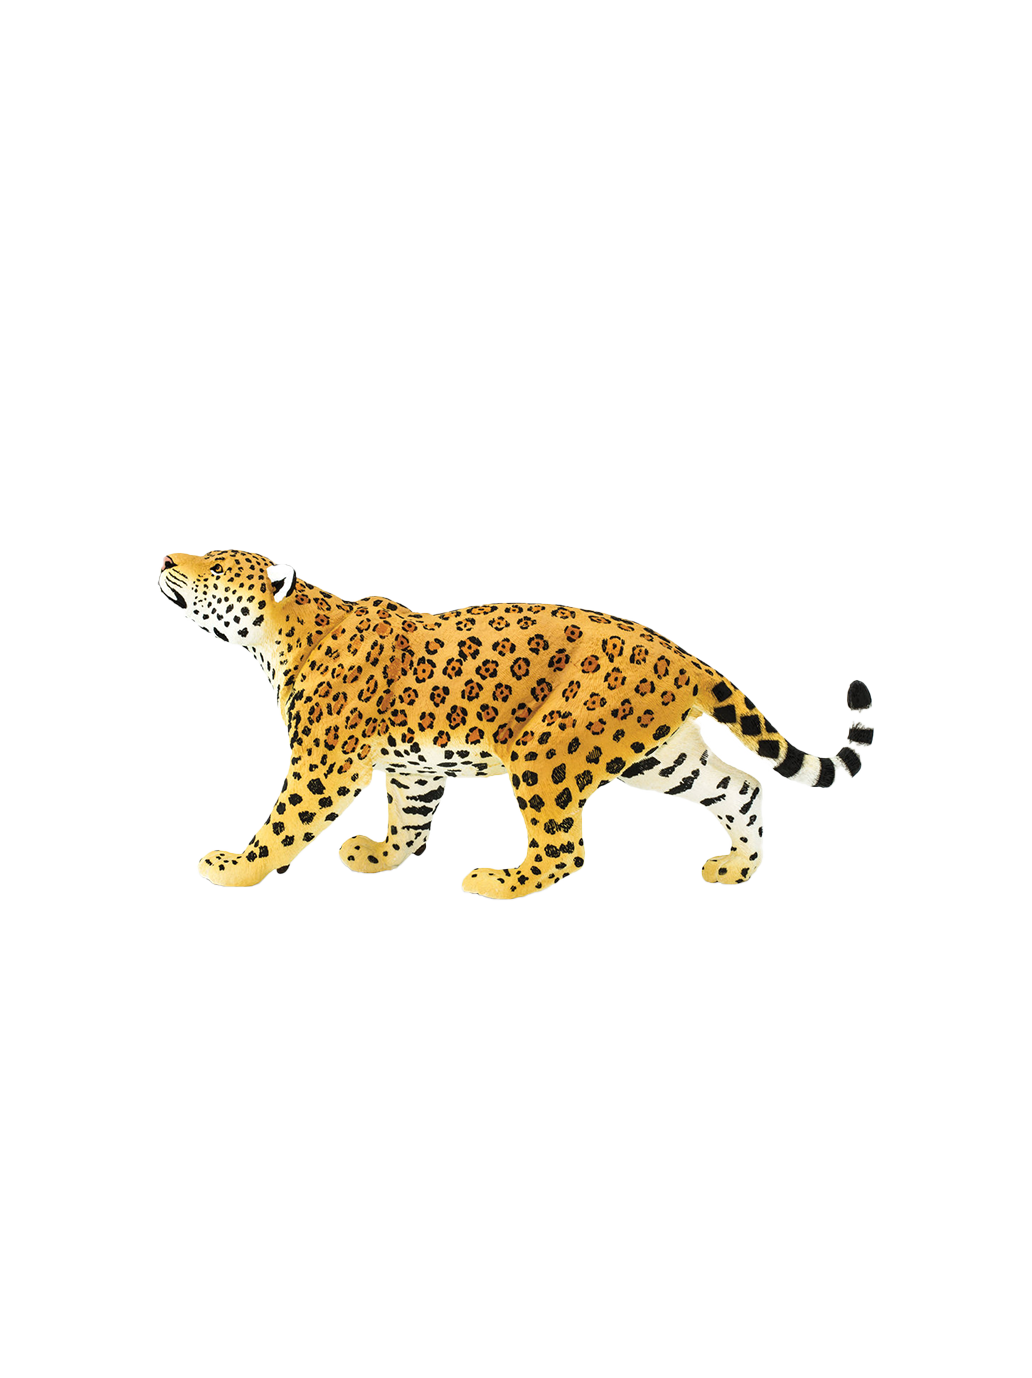 Una grande statuetta di giaguaro